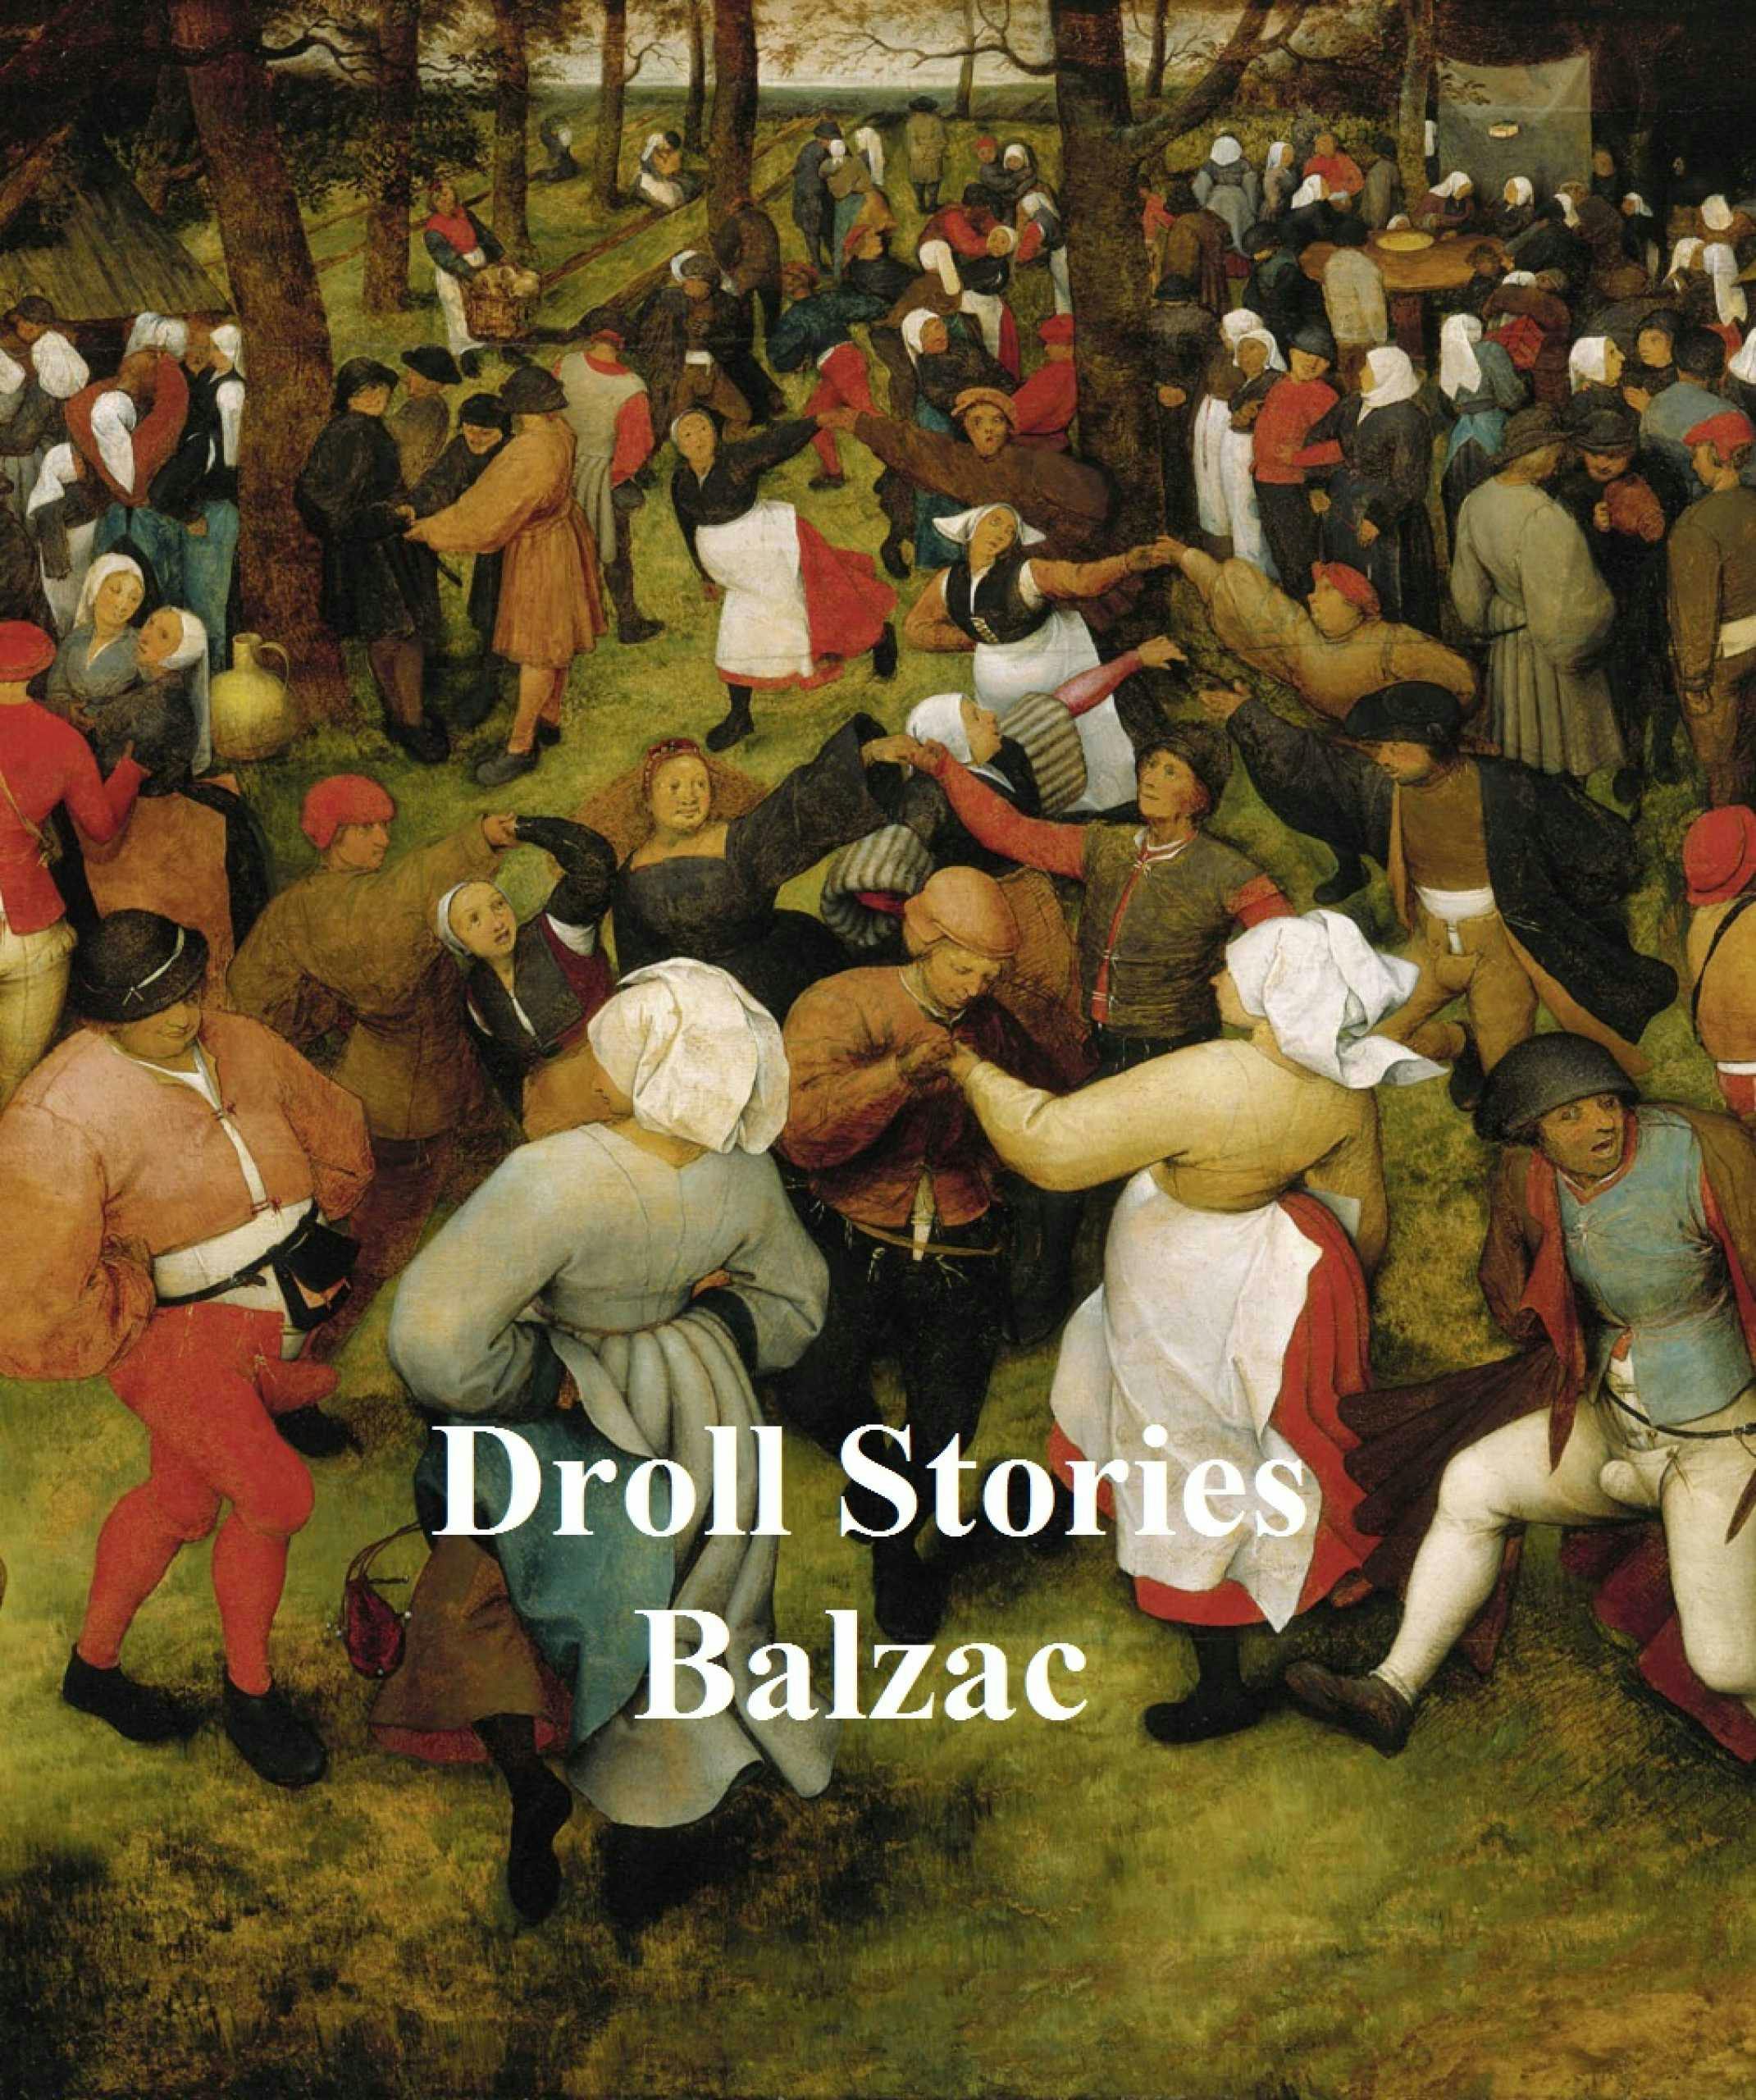 Droll Stories - Honore de Balzac